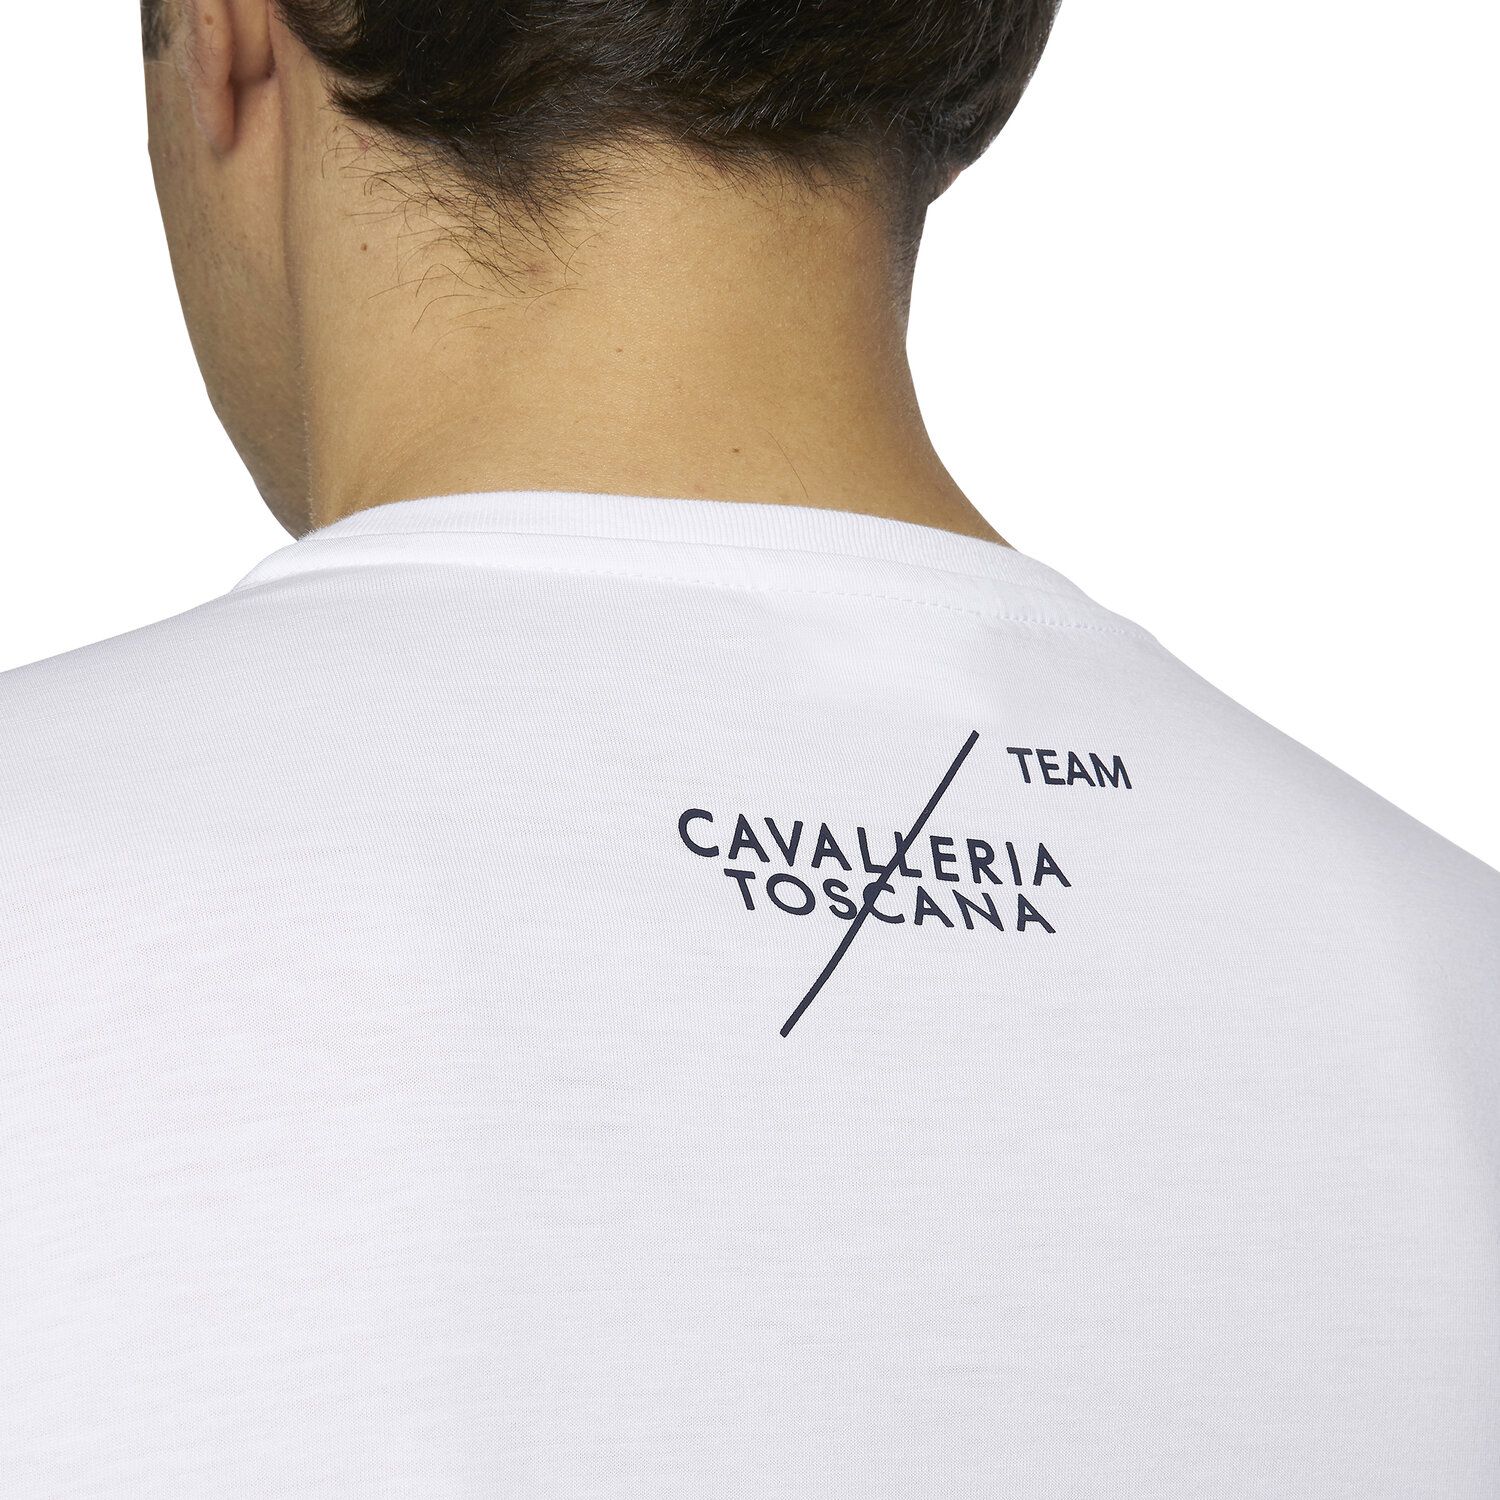 Cavalleria Toscana CT Team men's t-shirt WHITE-4